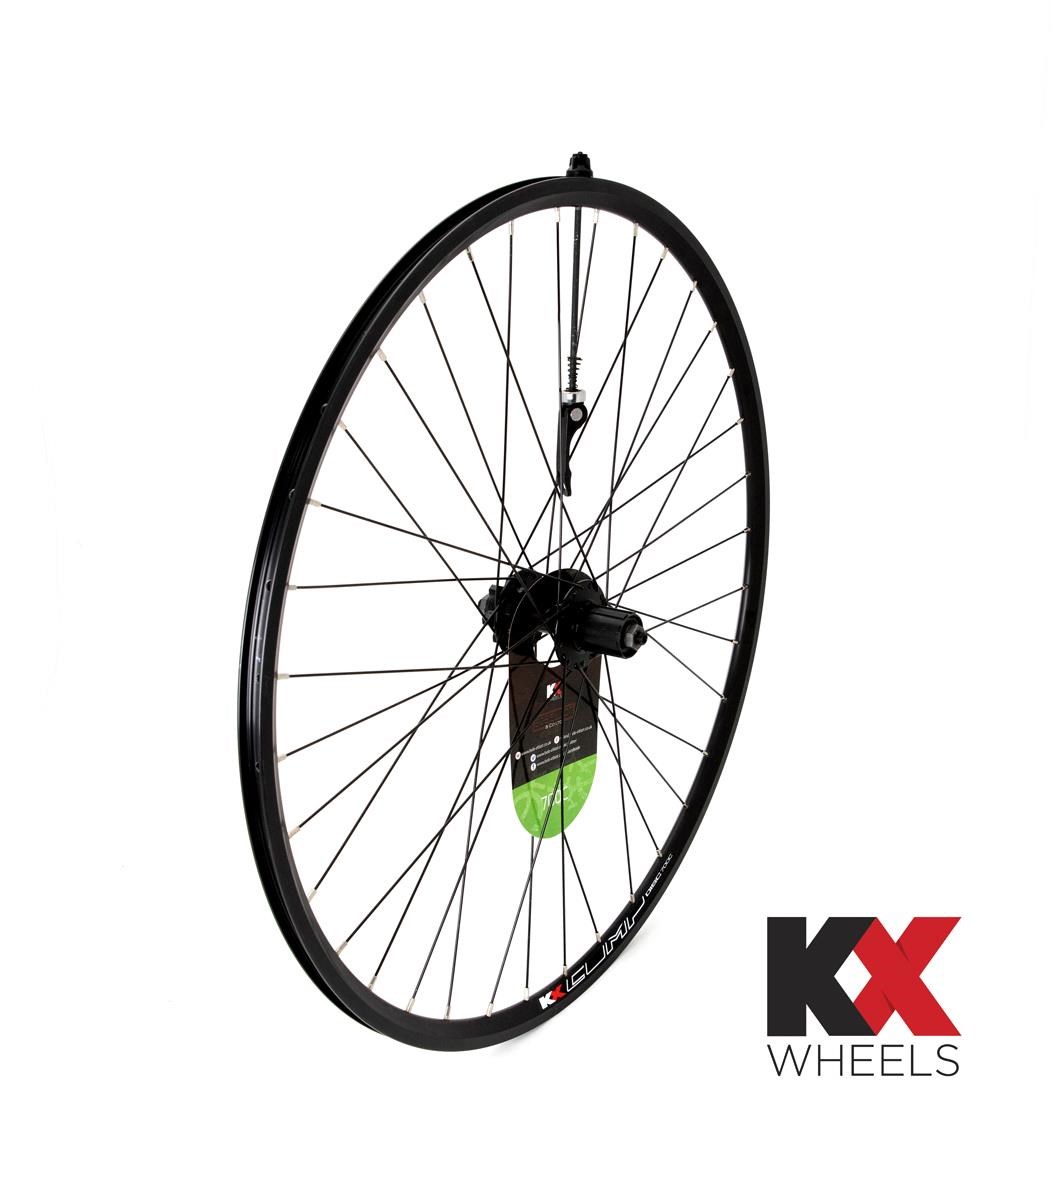 KX Wheels Road Doublewall Q/R Cassette Disc Brake Rear 700c Wheel product image